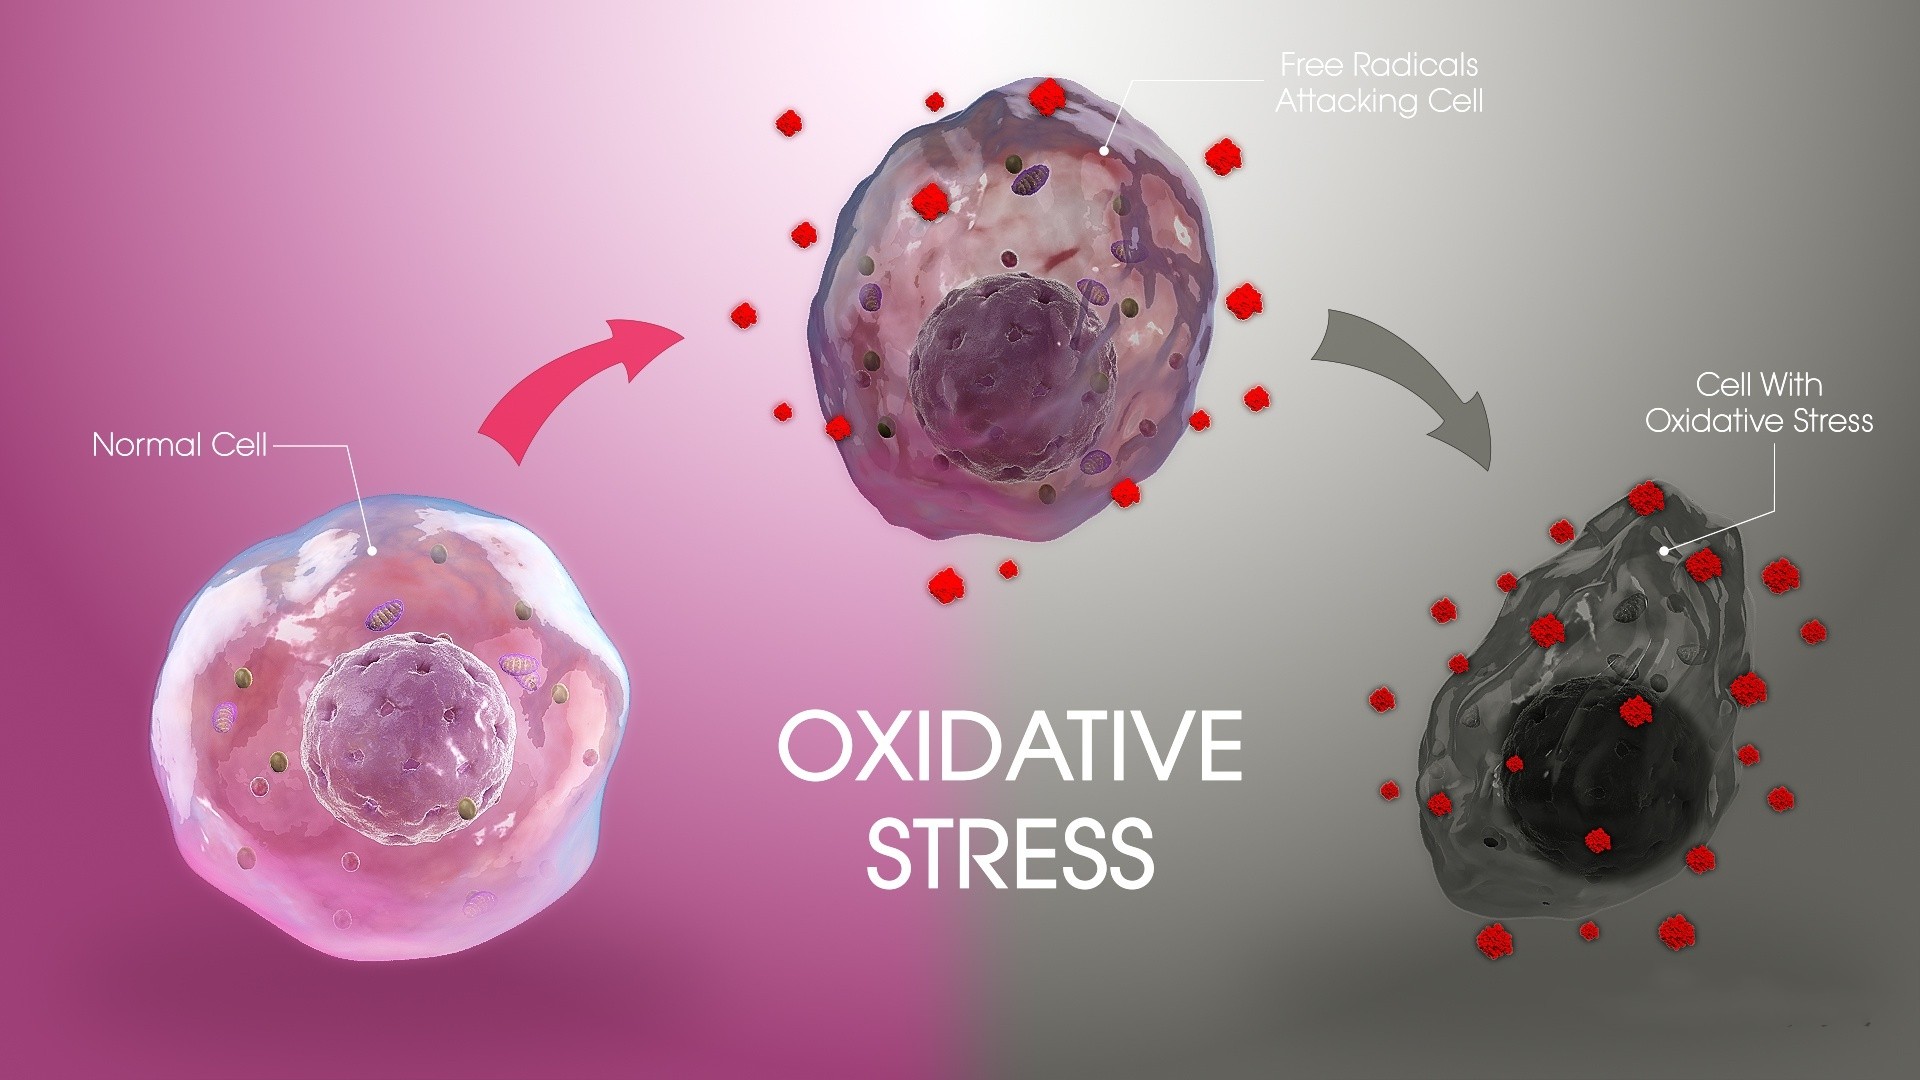 oxidative stress